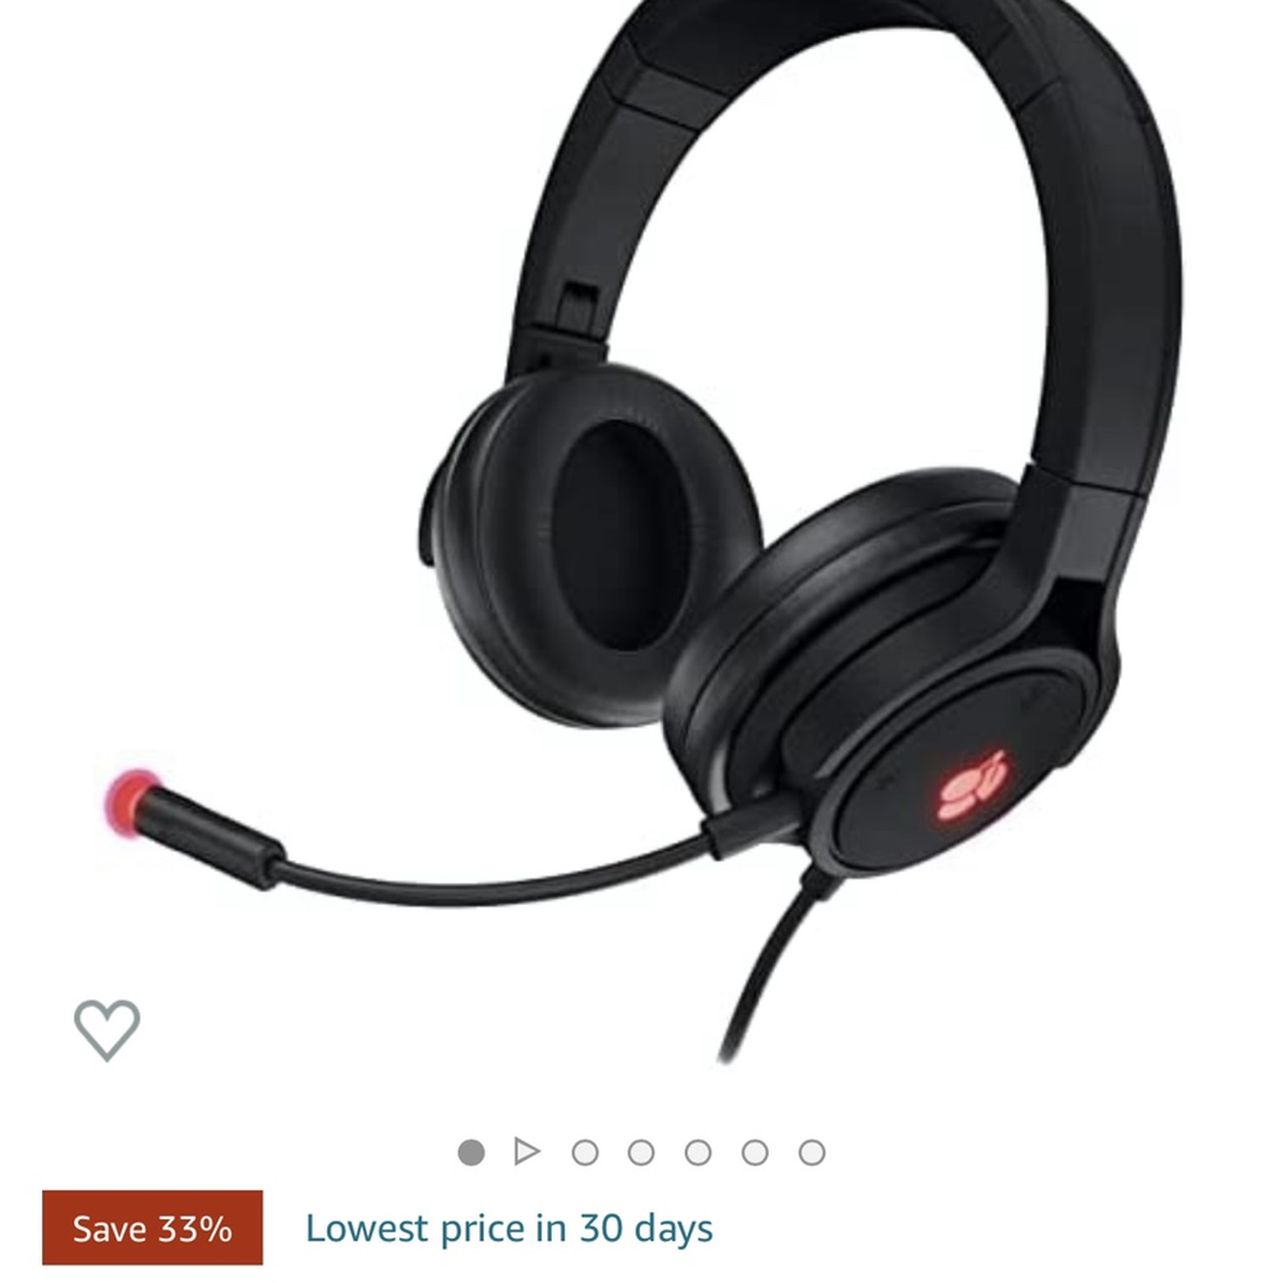 Cherry 7.1 Surround Sound Gaming Headphones